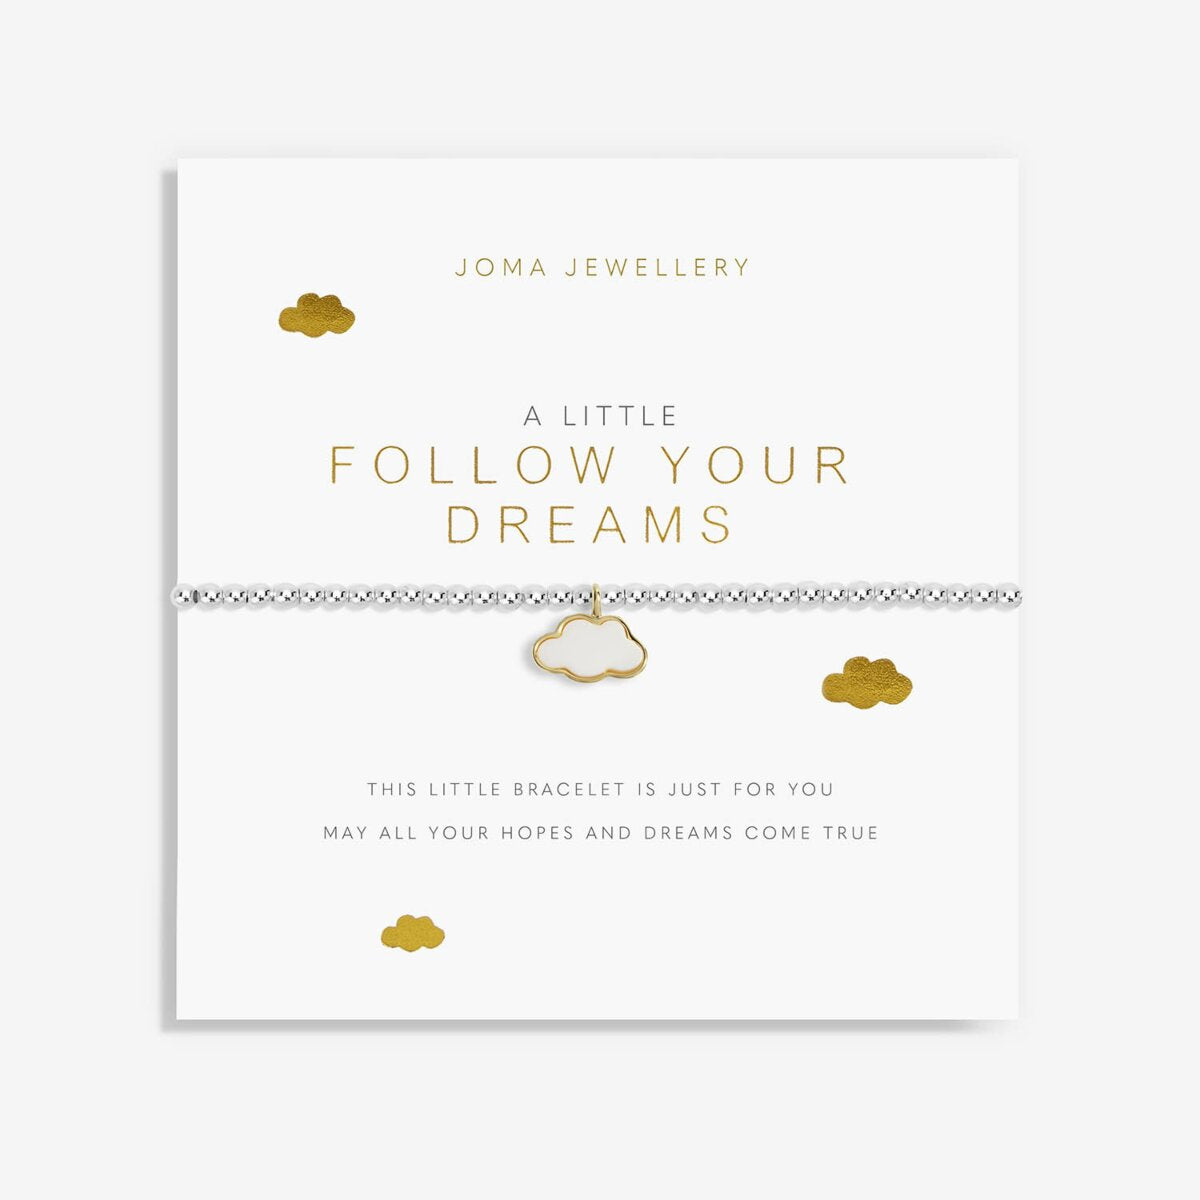 Joma Jewellery 'A Little' Follow Your Dreams